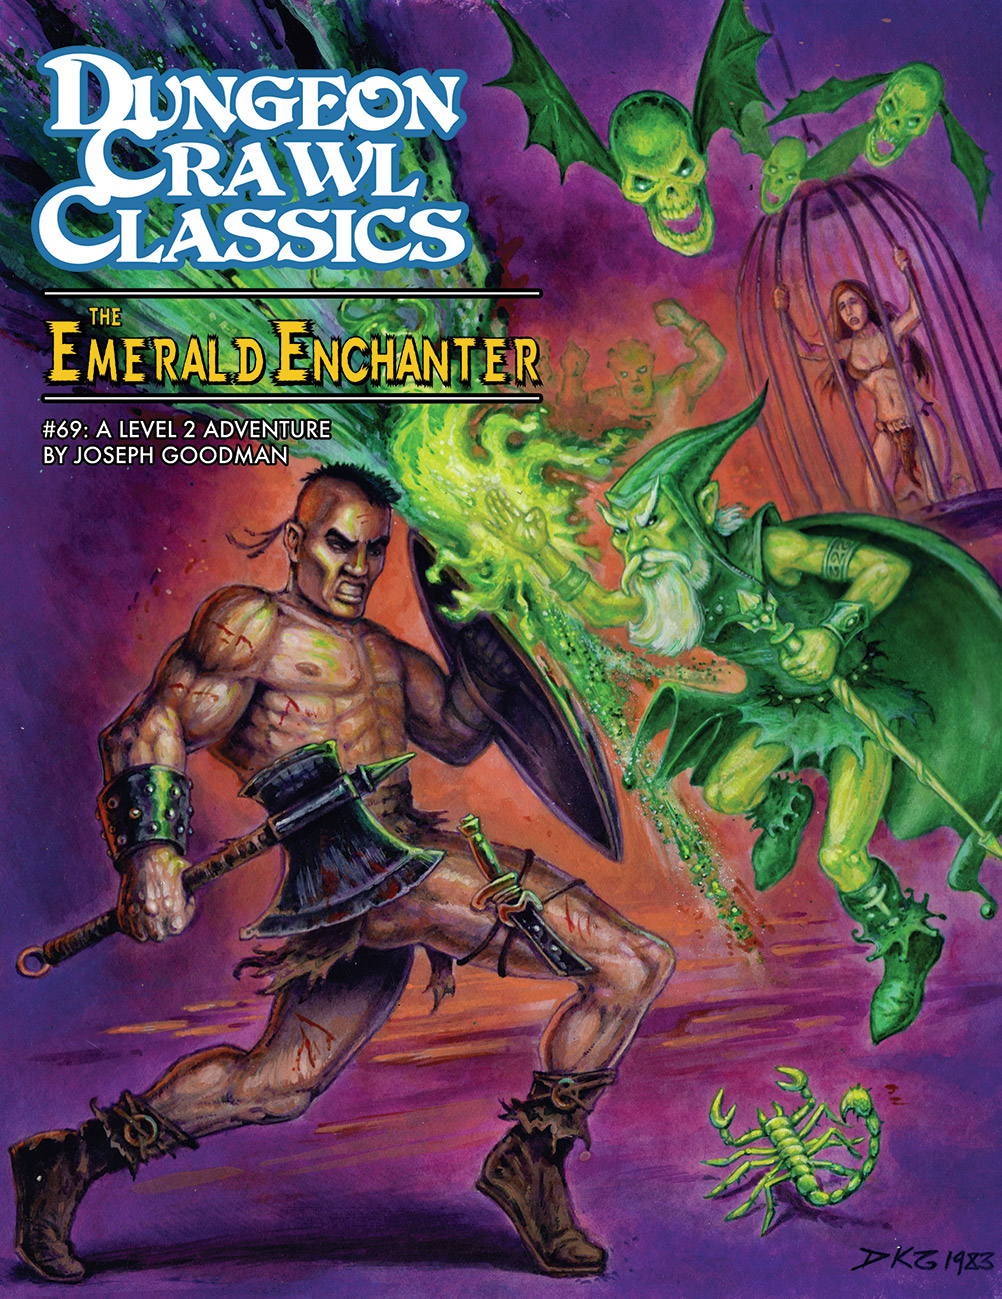 Dungeon Crawl Classics (DCC) Adventure #69: The Emerald Enchanter